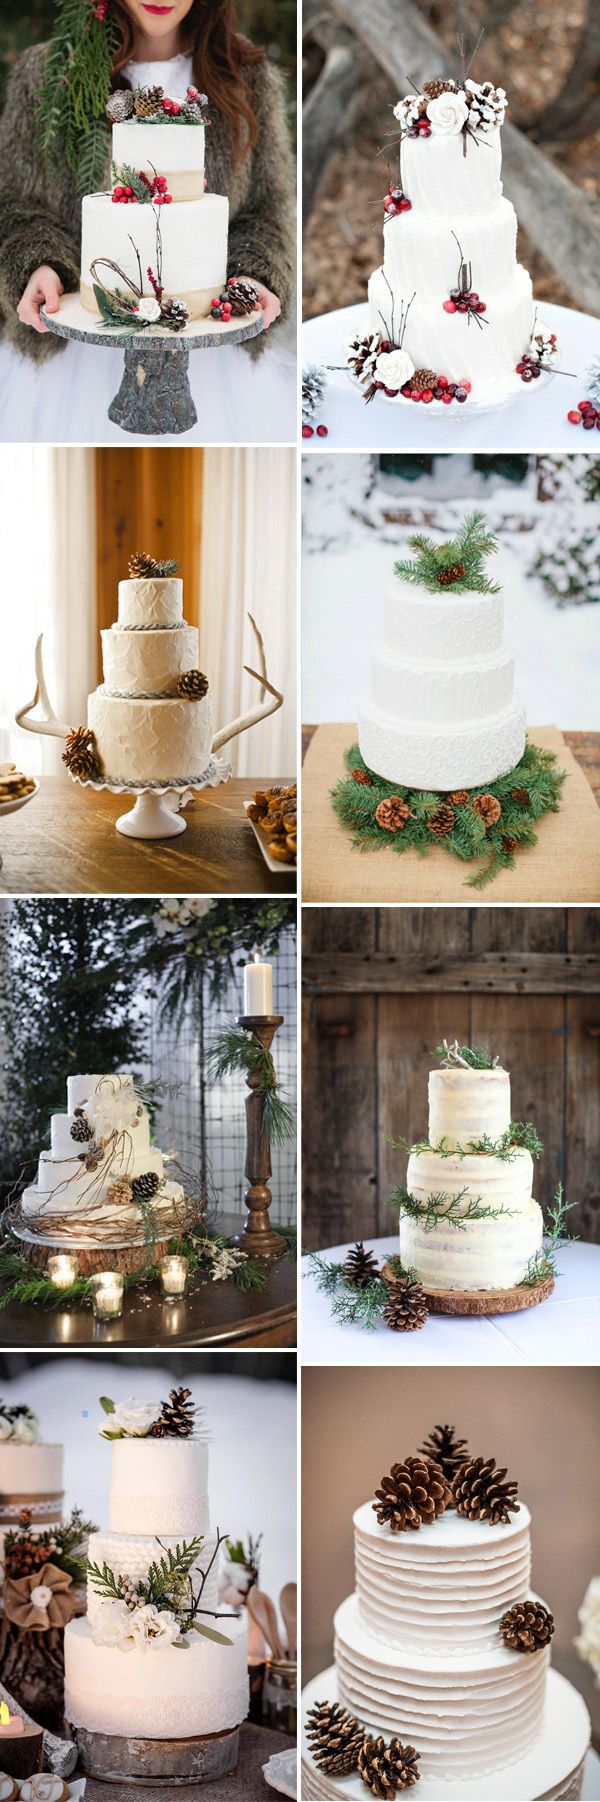 White Winter Wedding Cakes - via EC Invites